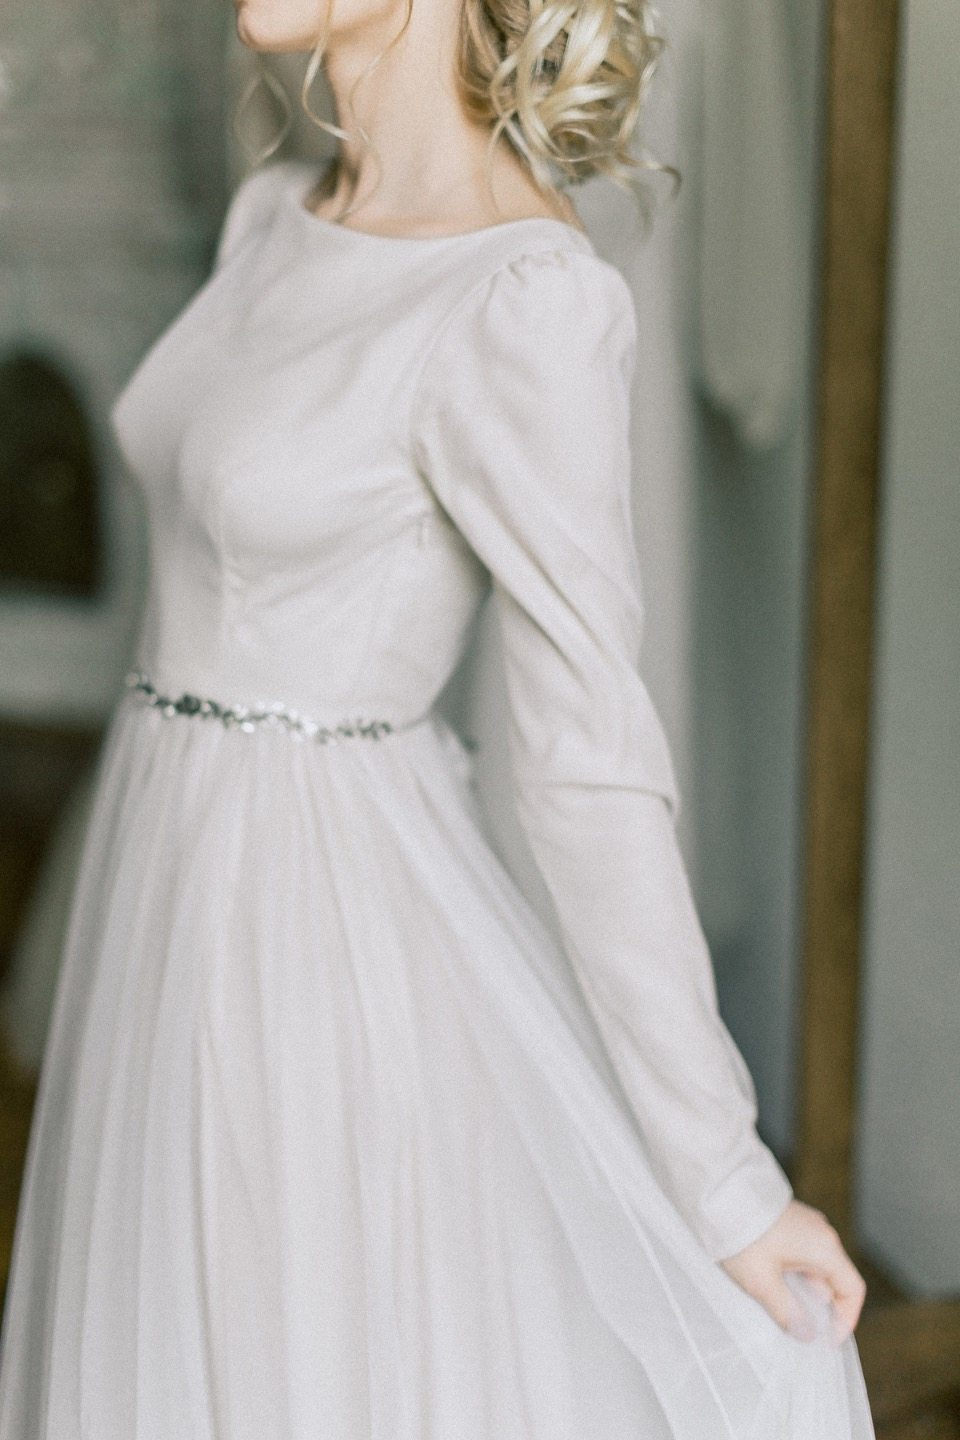 The Julia Berlinskaya inspiration dress: стилизованная фотосессия